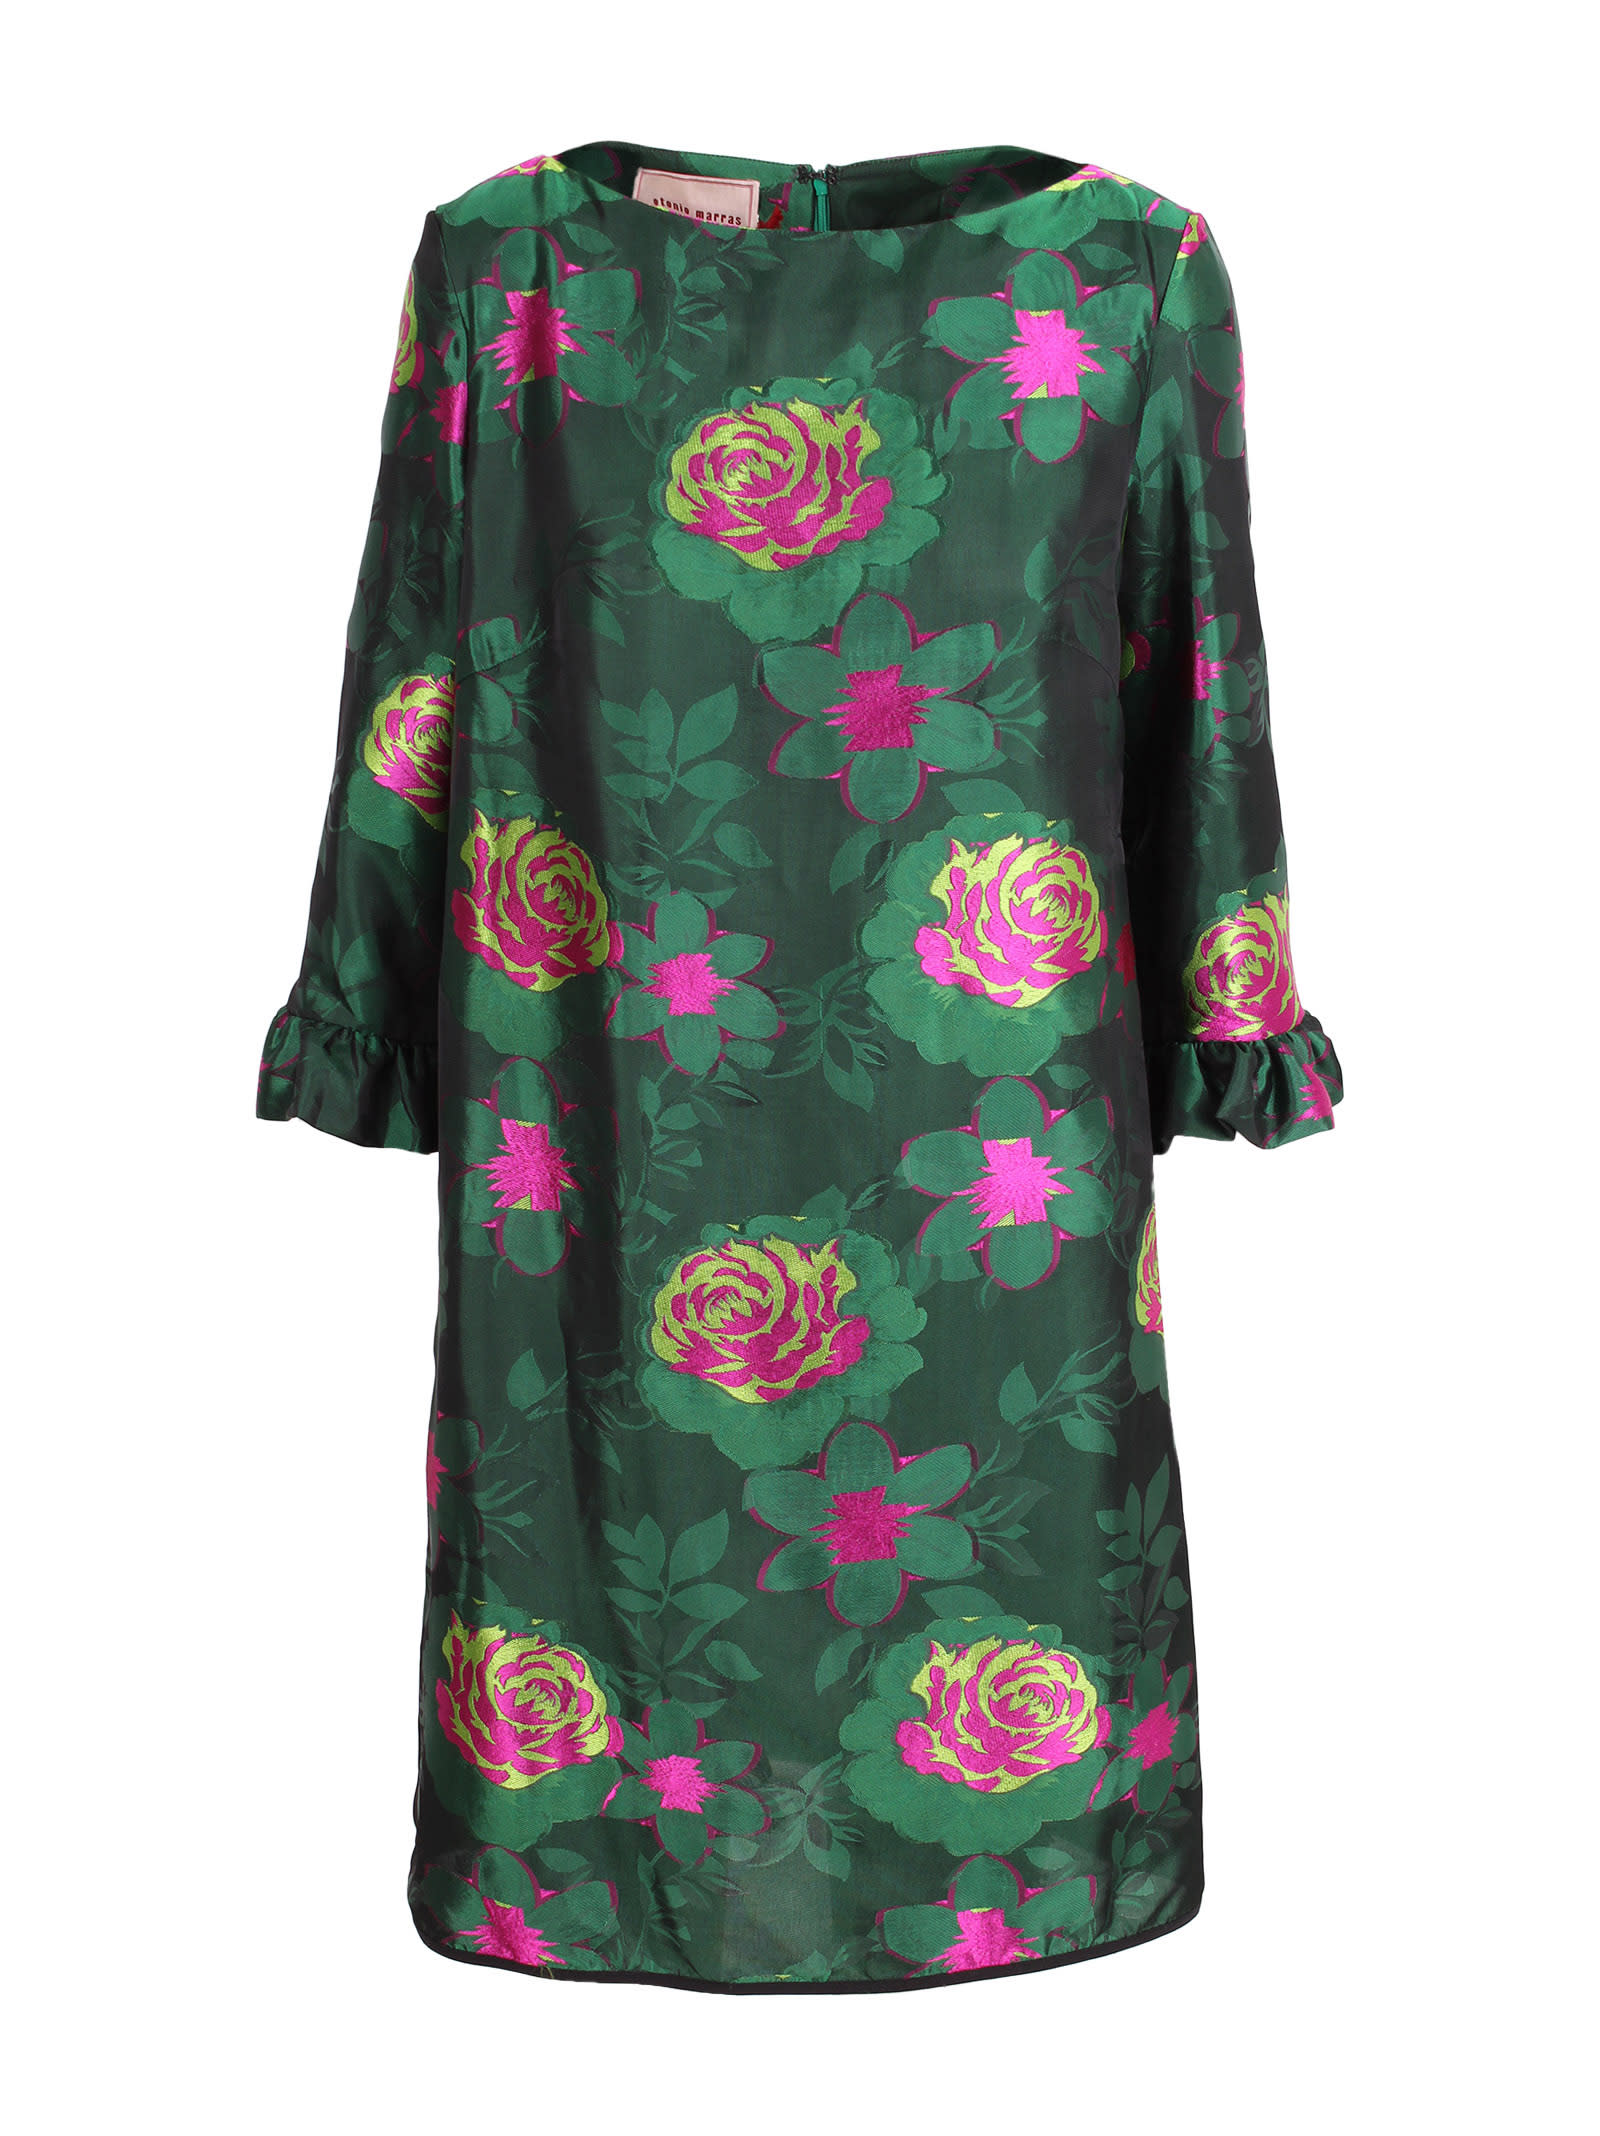 Antonio Marras speranza Floral Patterned Dress